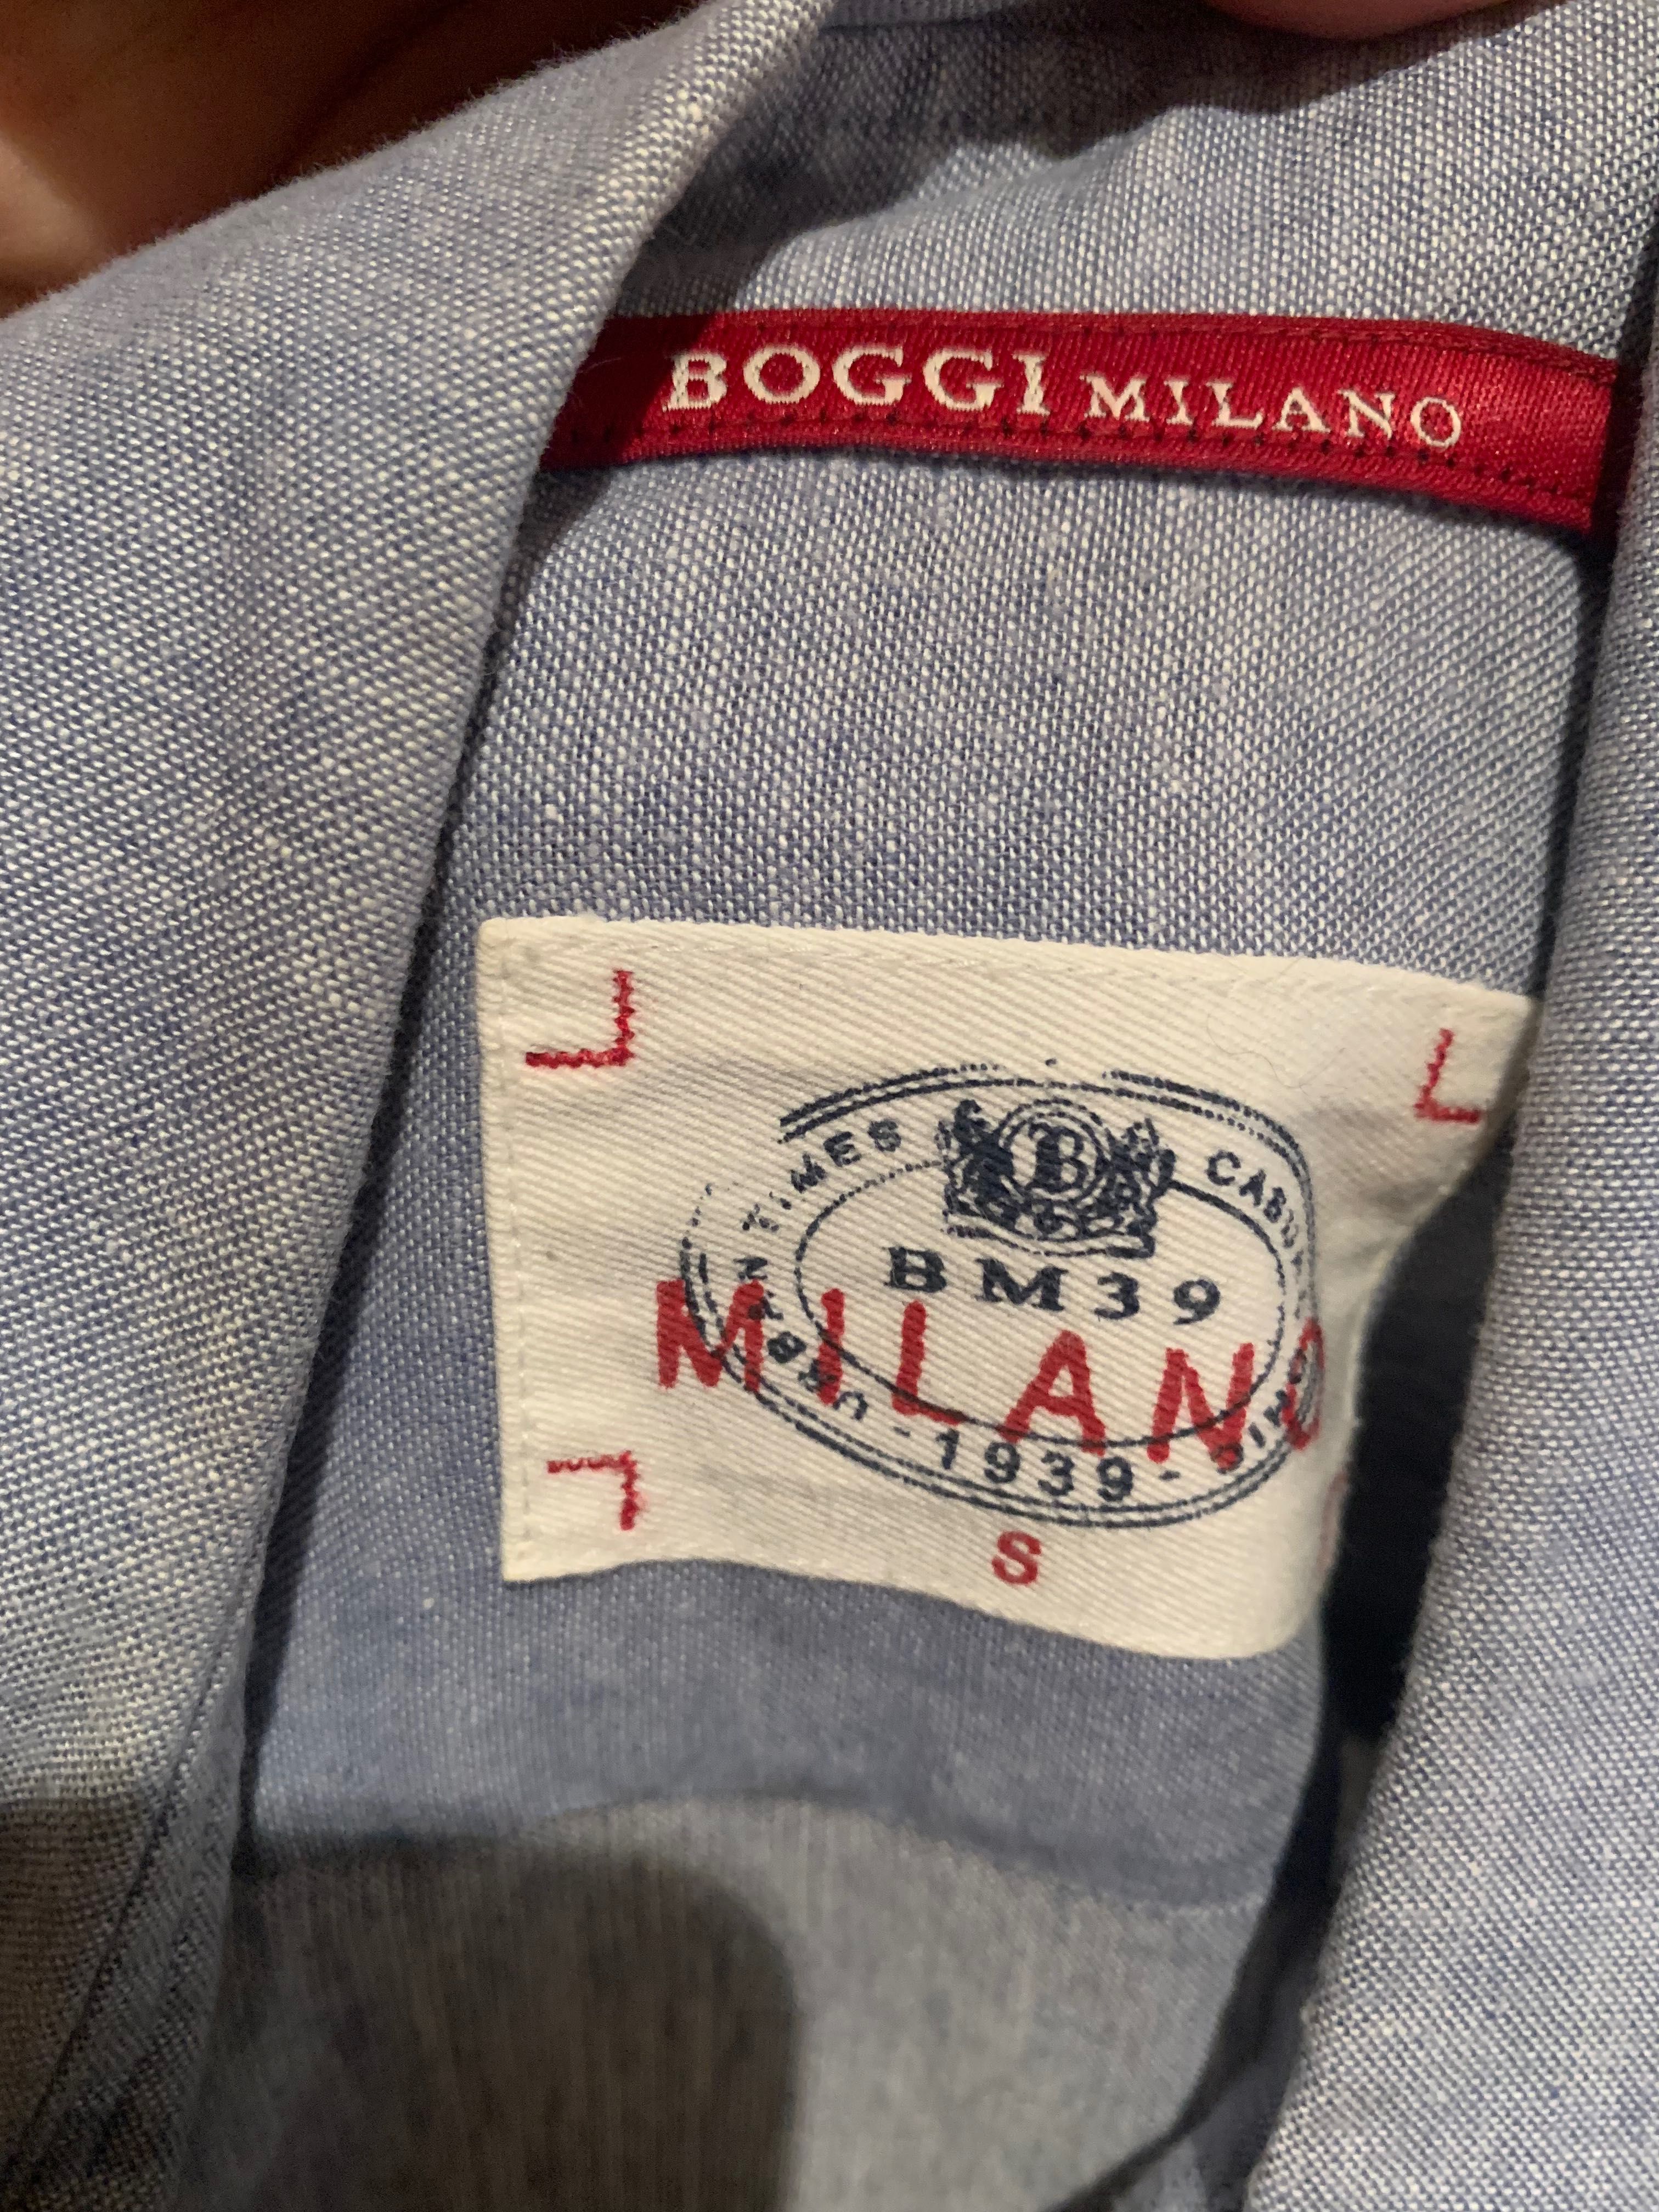 Camisa de homem italiana